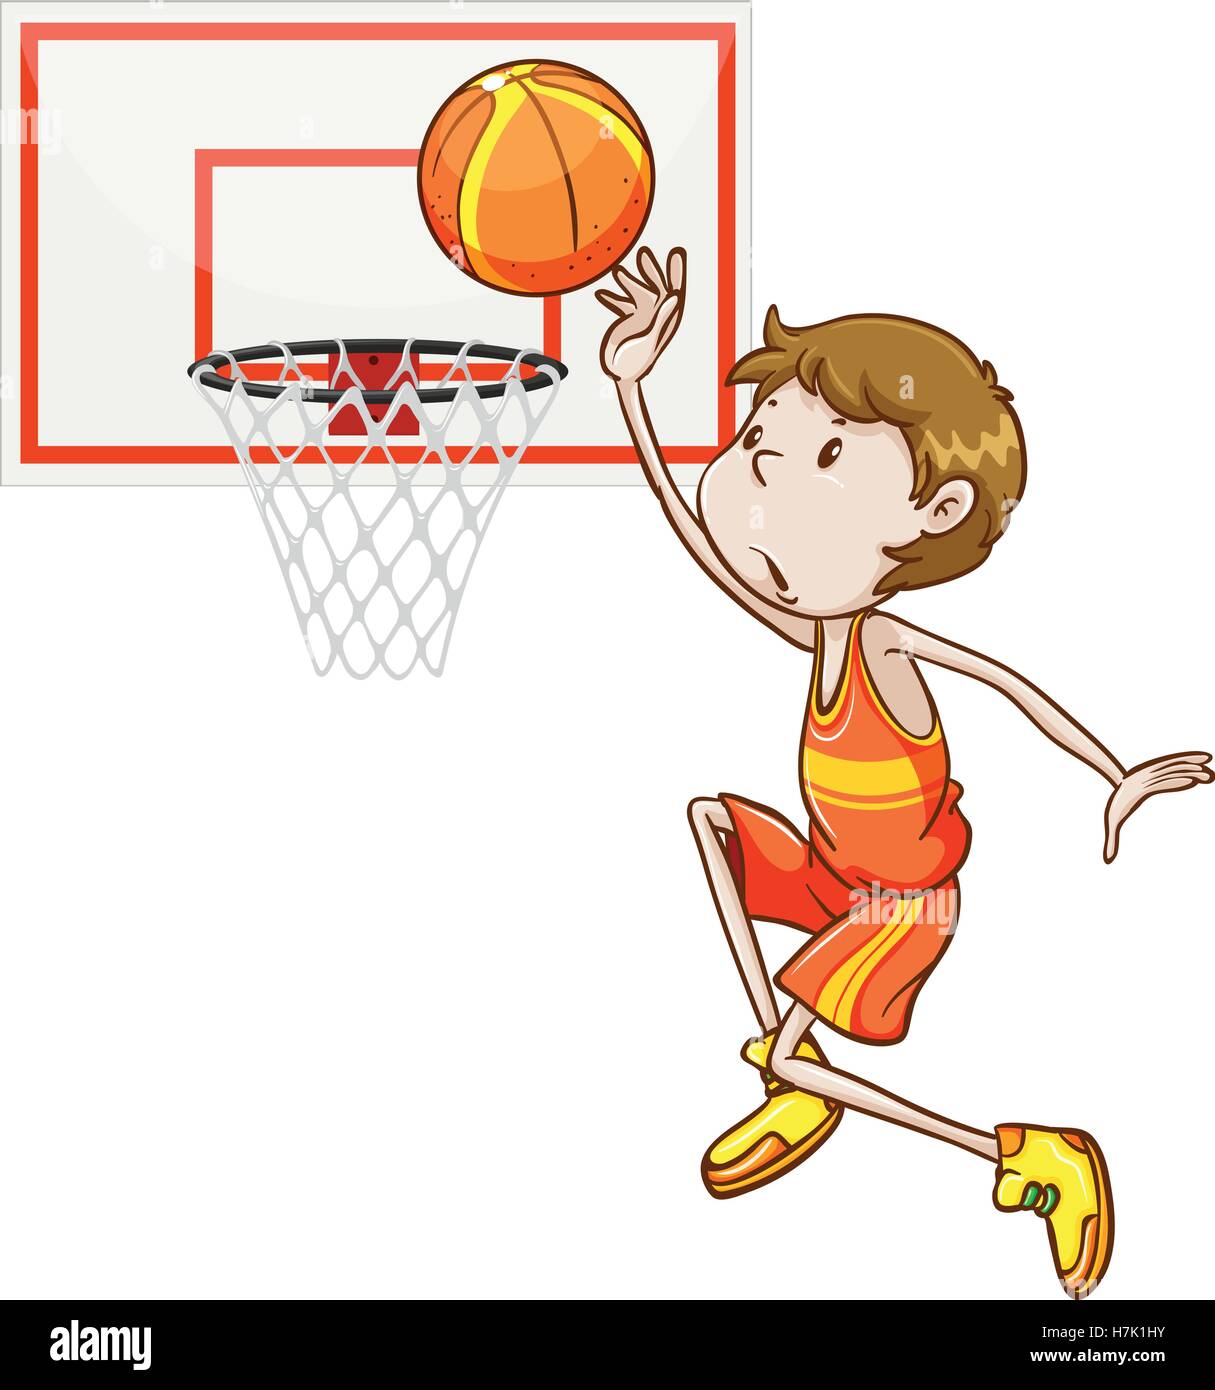 Man Shooting Basketball In The Hoop Illustration Stock Vector Image Art Alamy